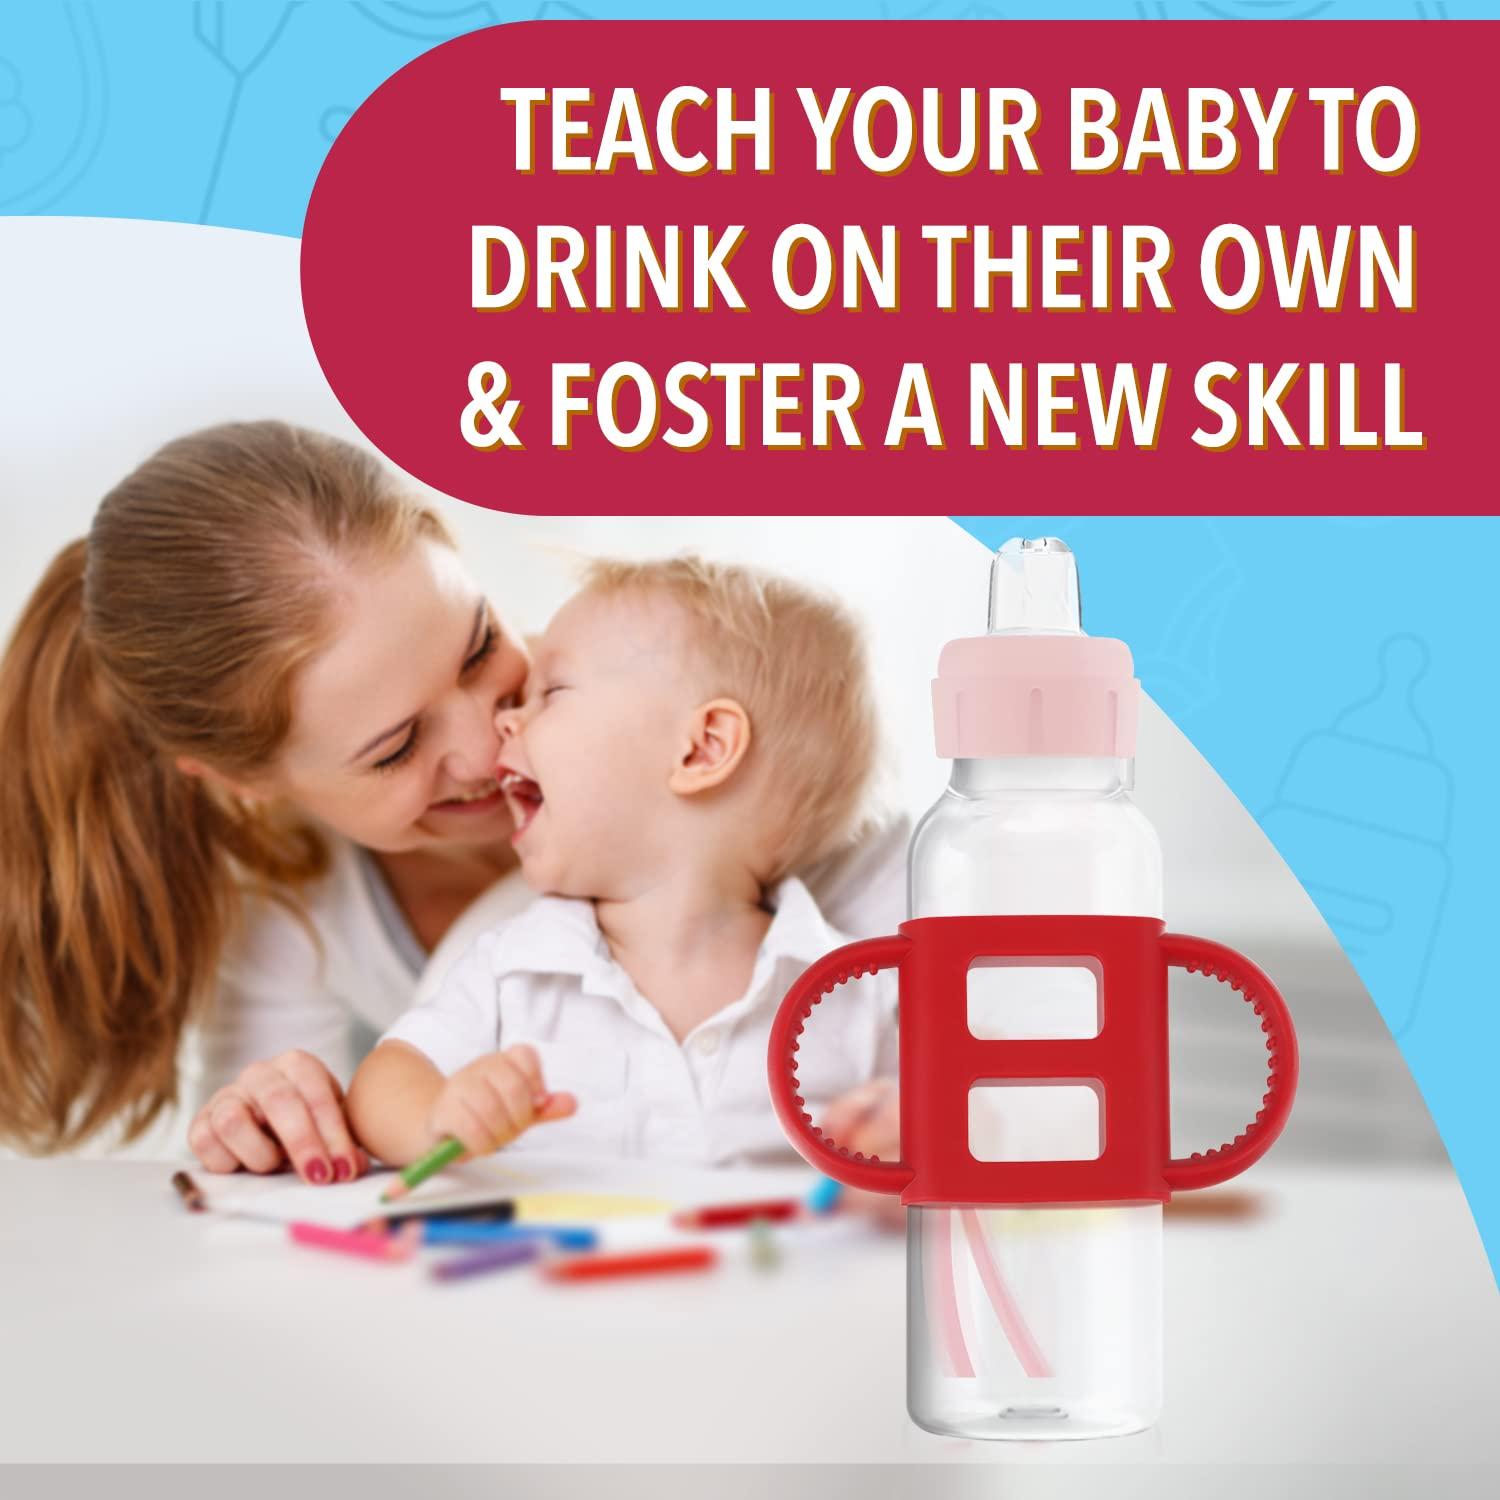 Easy Drink baby bottle